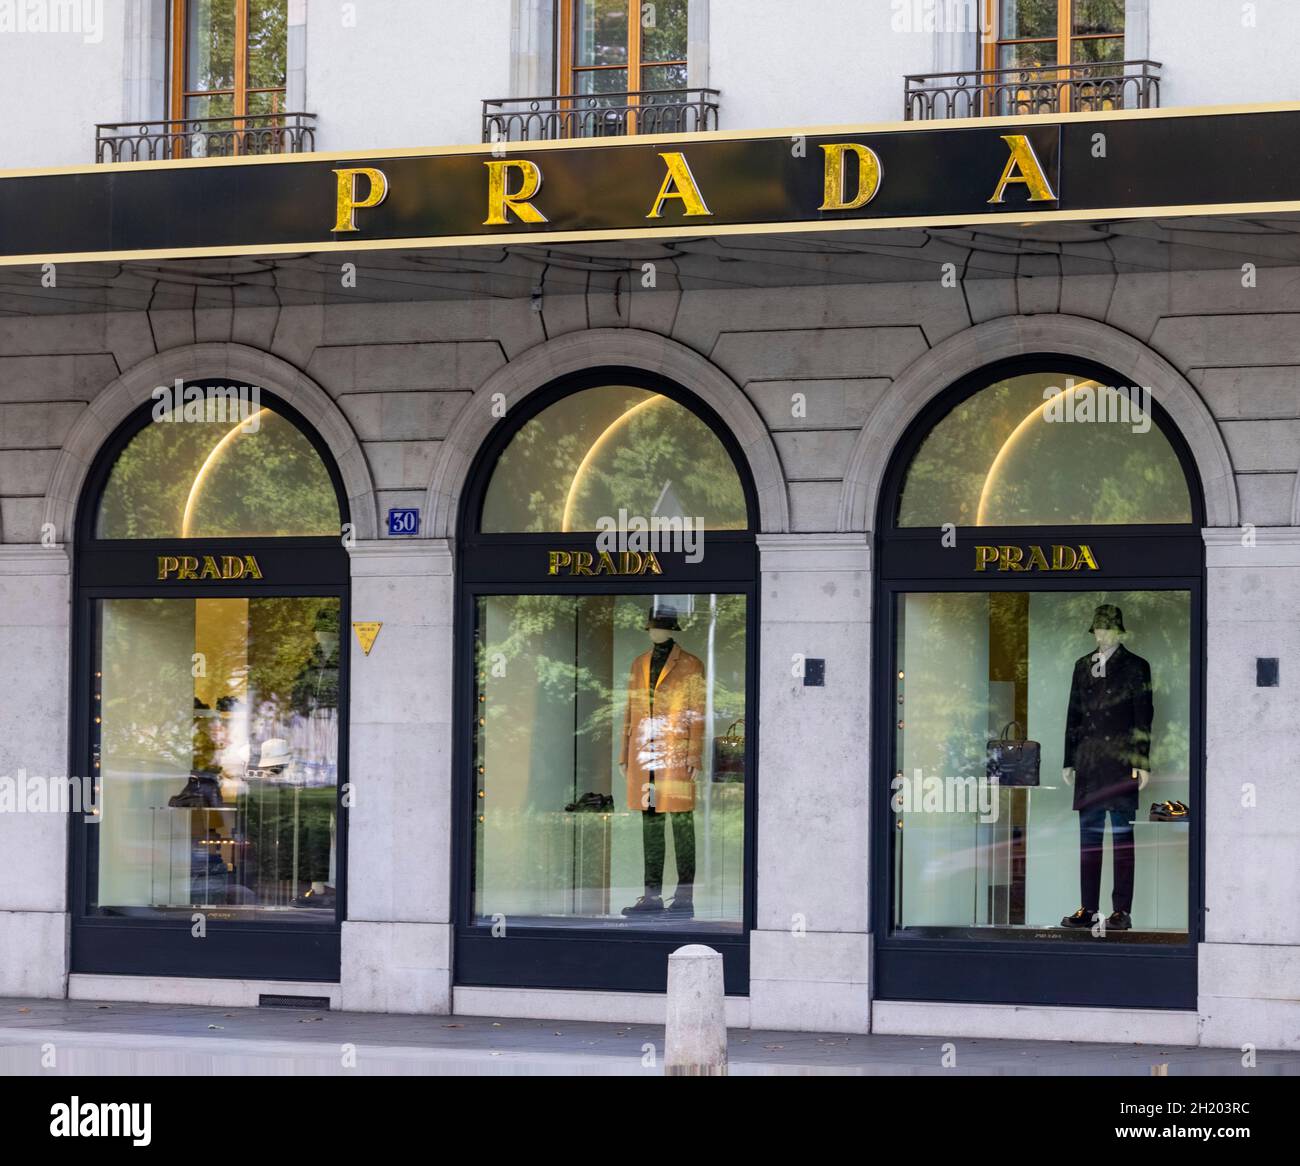 Prada shop, Geneva, Switzerland Stock Photo - Alamy